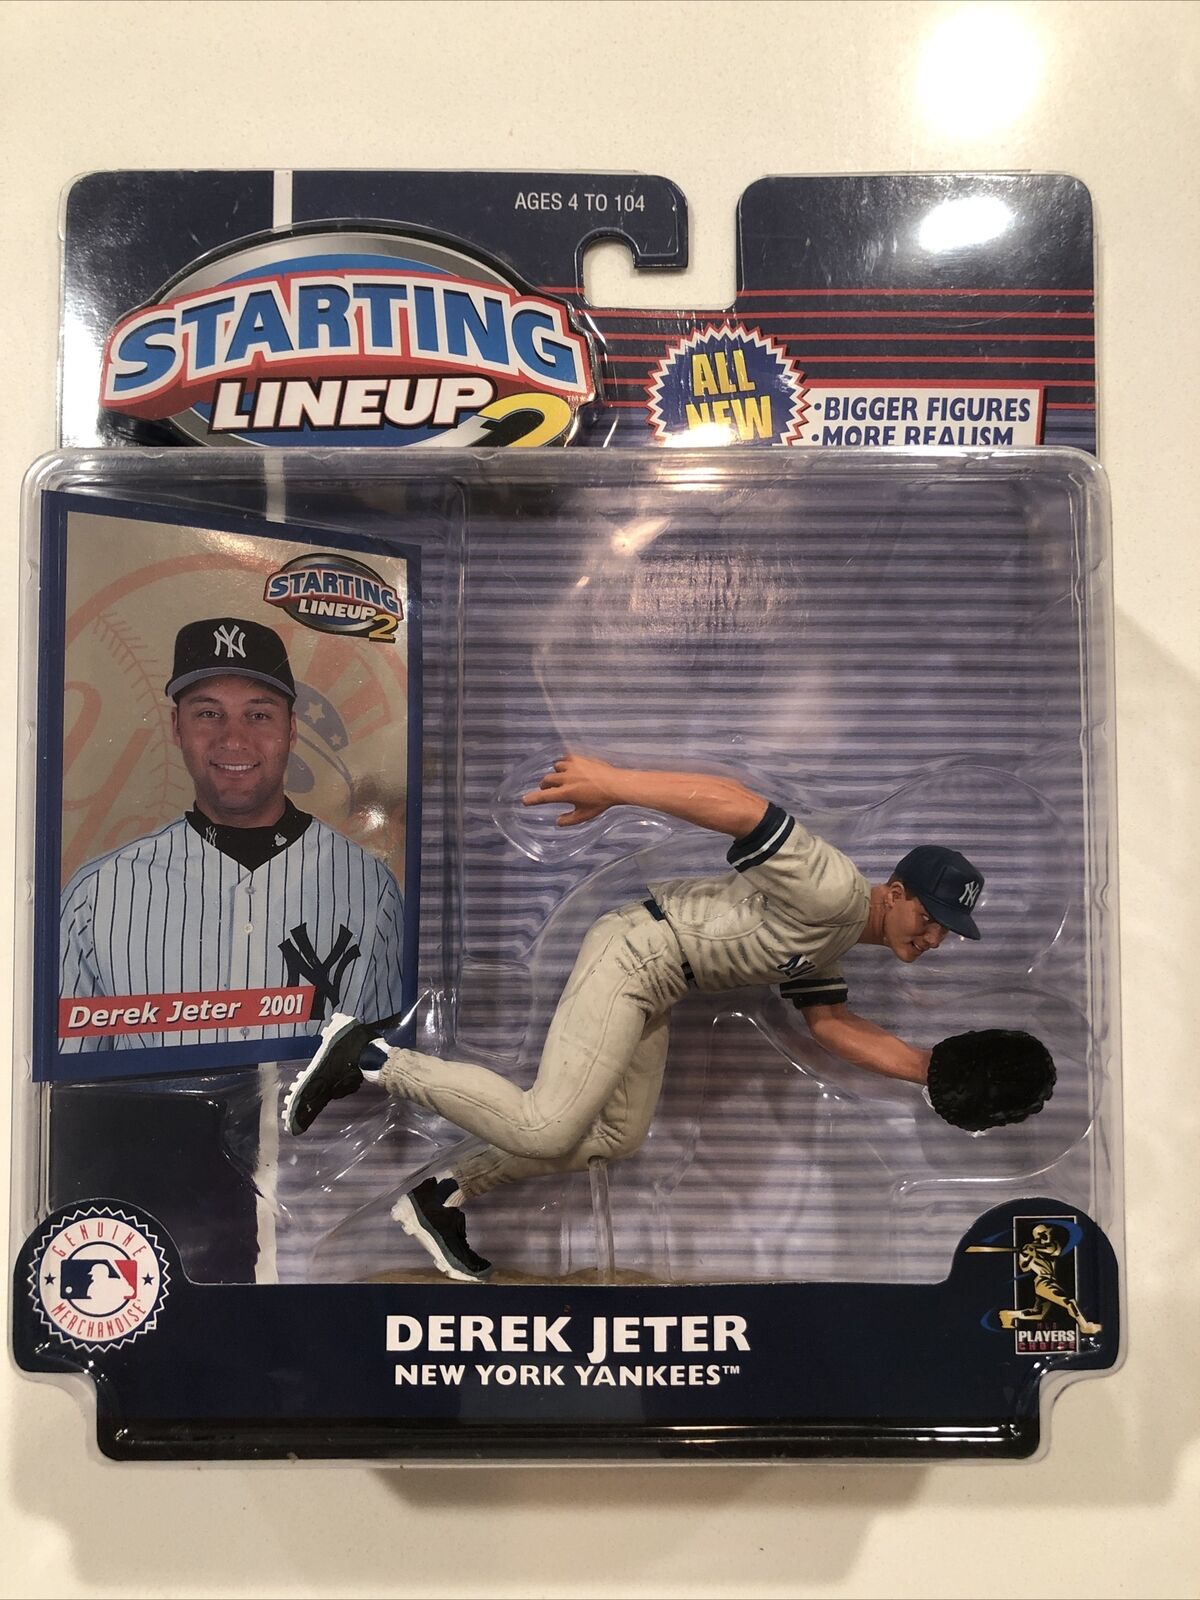 2001 DEREK JETER Starting Lineup 2 New York Yankees Baseball SLU Figure + Card